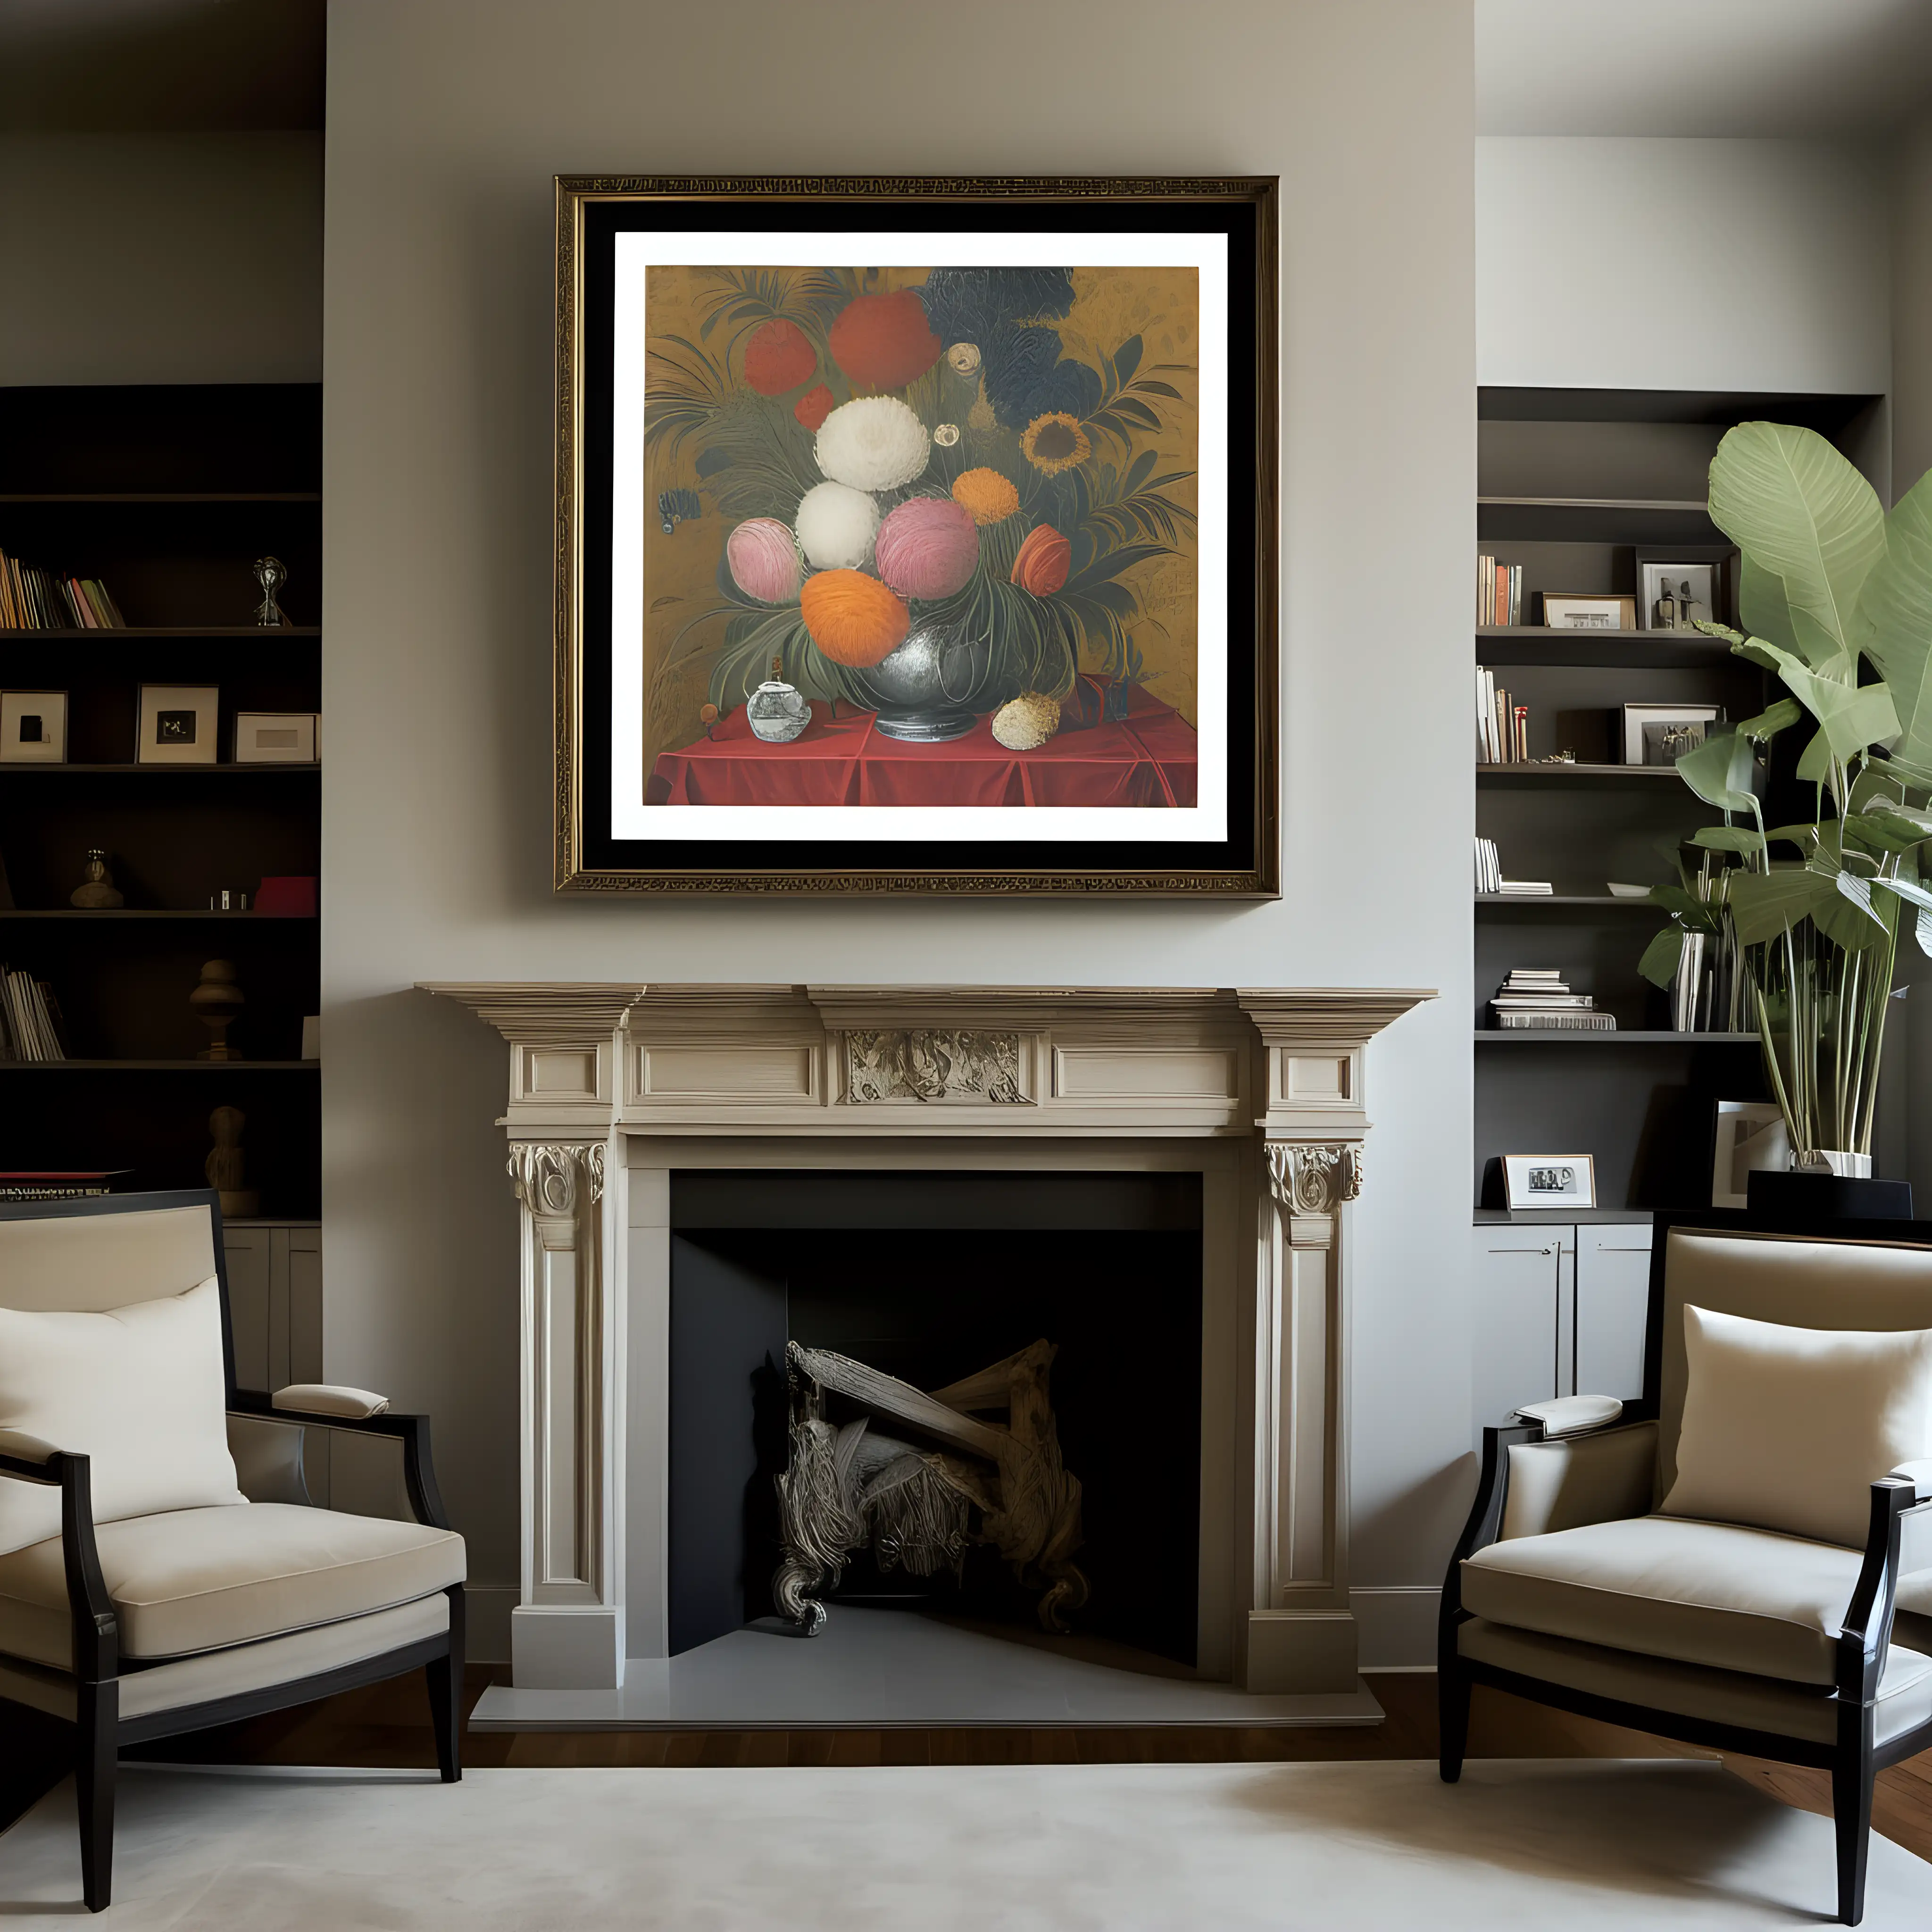 Elegant Framed Art Displayed Above a Luxurious Fireplace